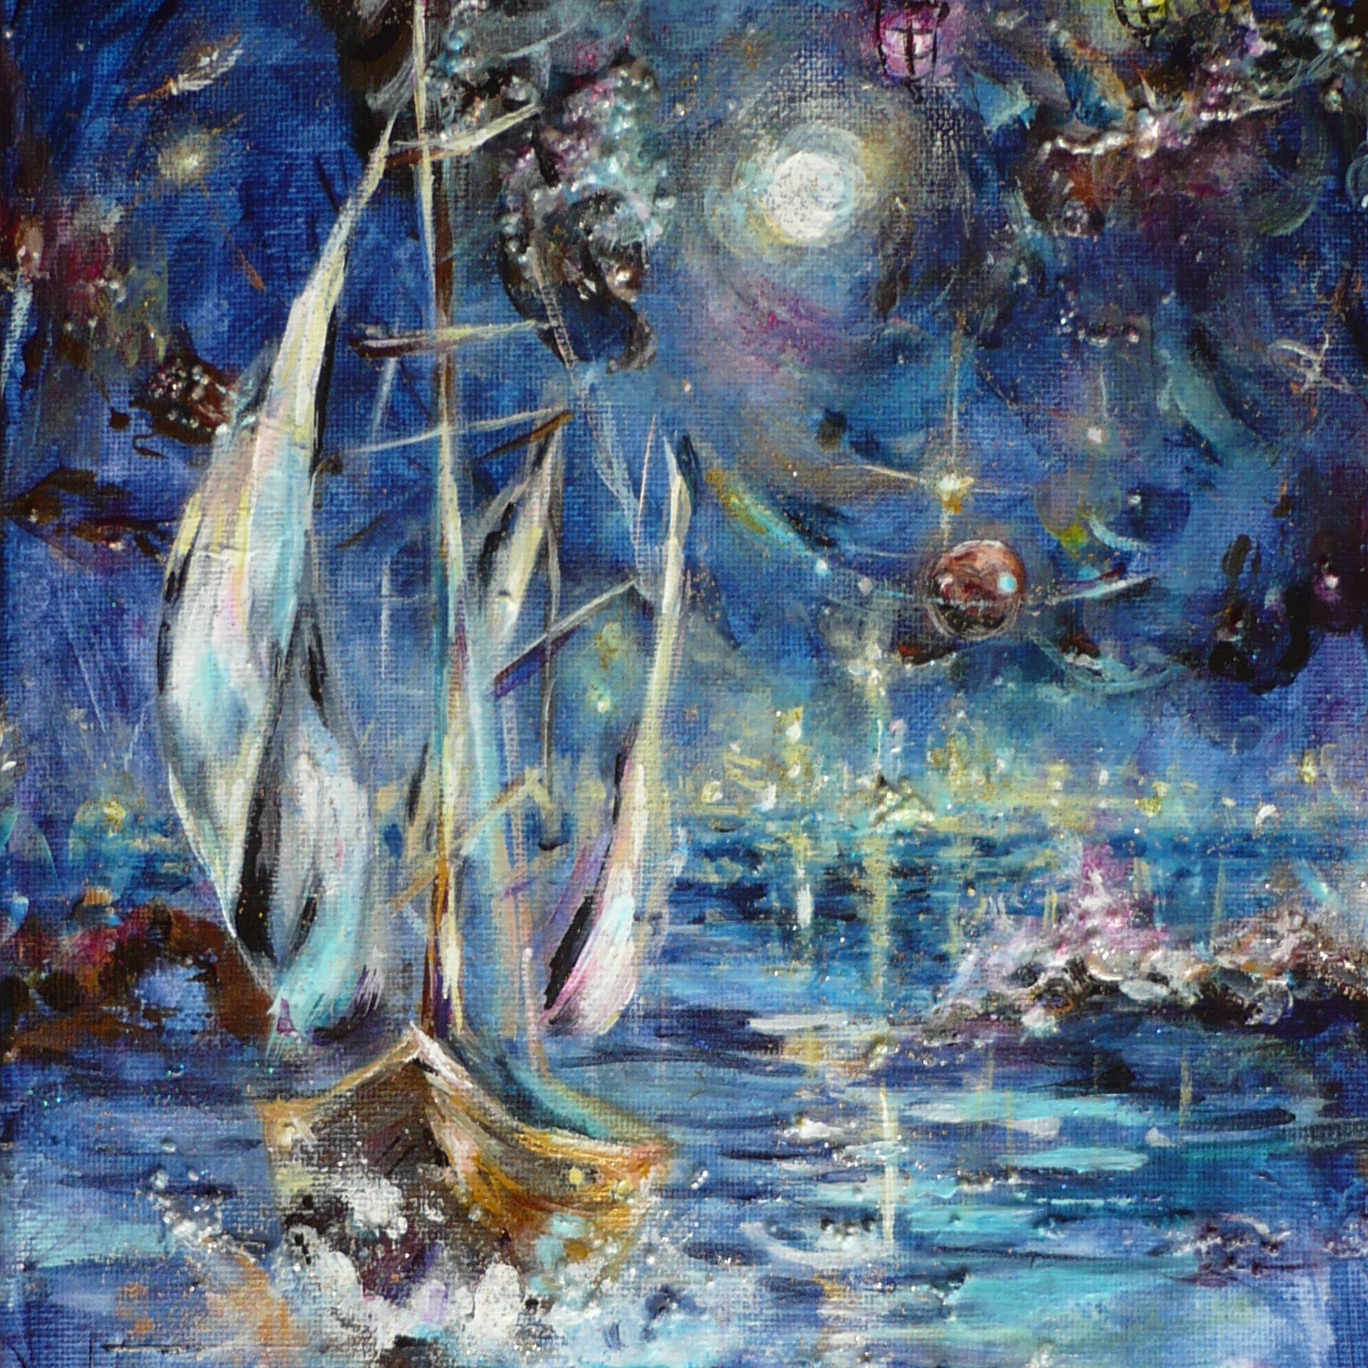 A ship heads towards unfamiliar land, under unfamiliar stars. Original painting.